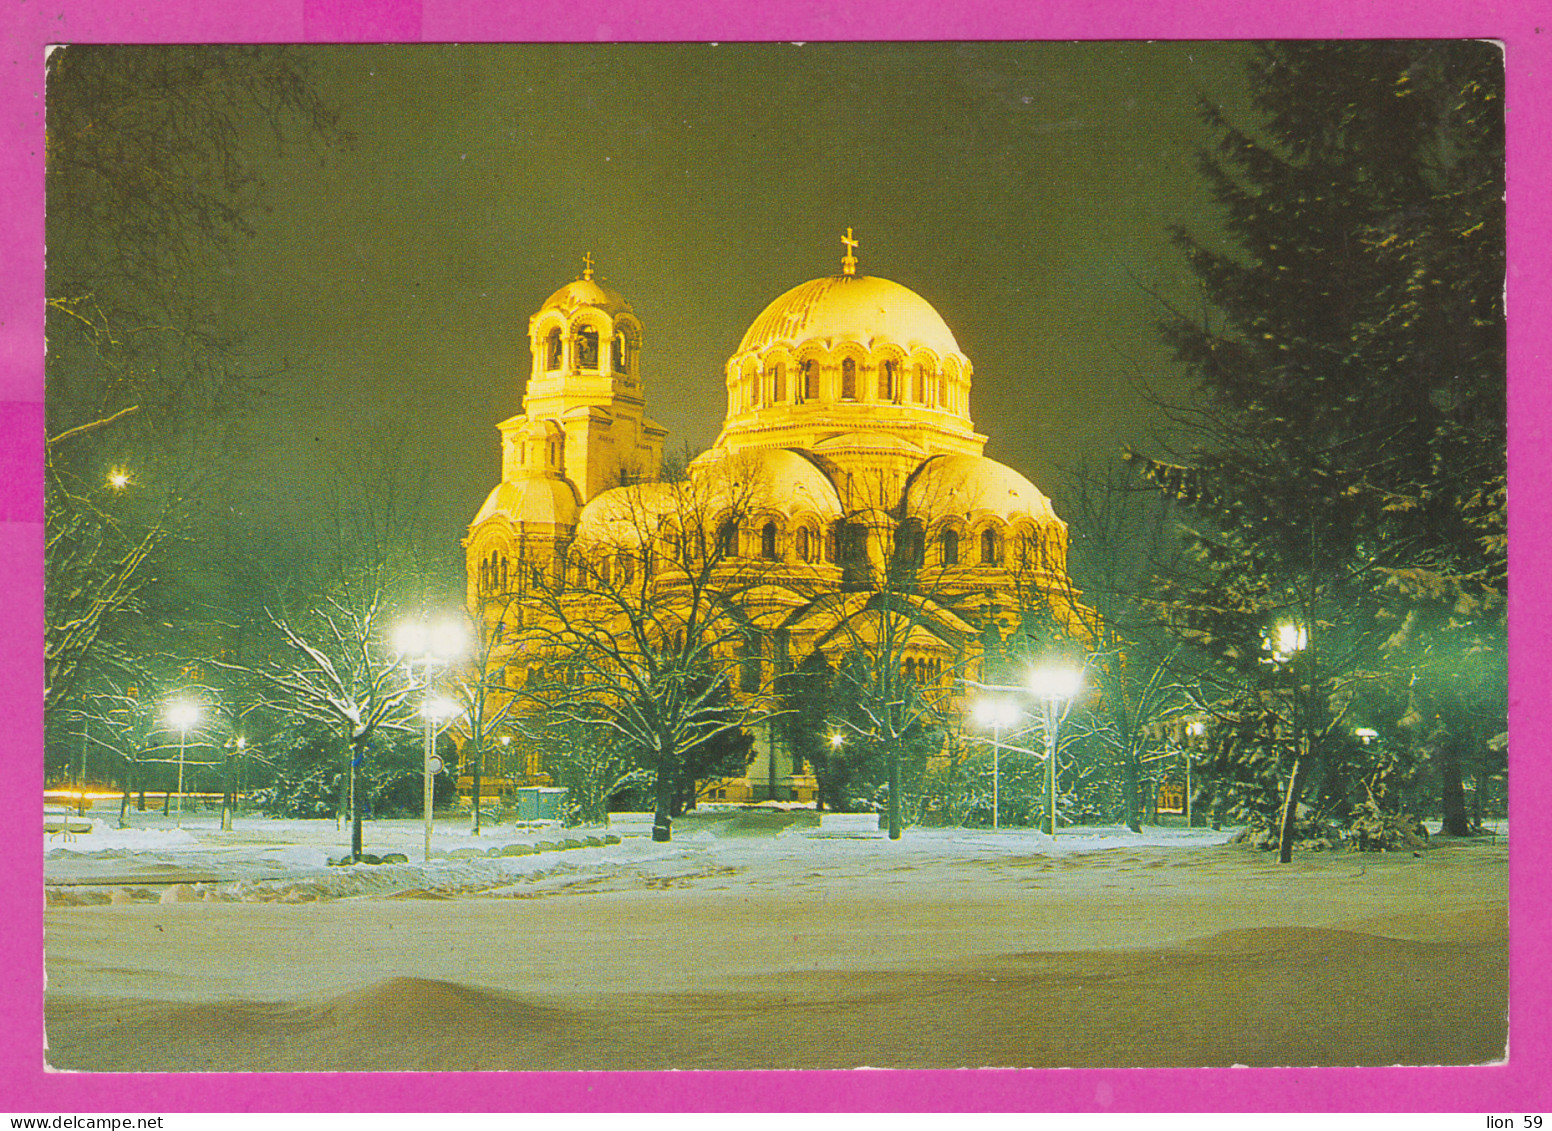 311290 / Bulgaria - Sofia - Winter Illuminate Patriarchal Cathedral Of "St. Alexander Nevsky" Building 1988 PC Septemvri - Chiese E Cattedrali